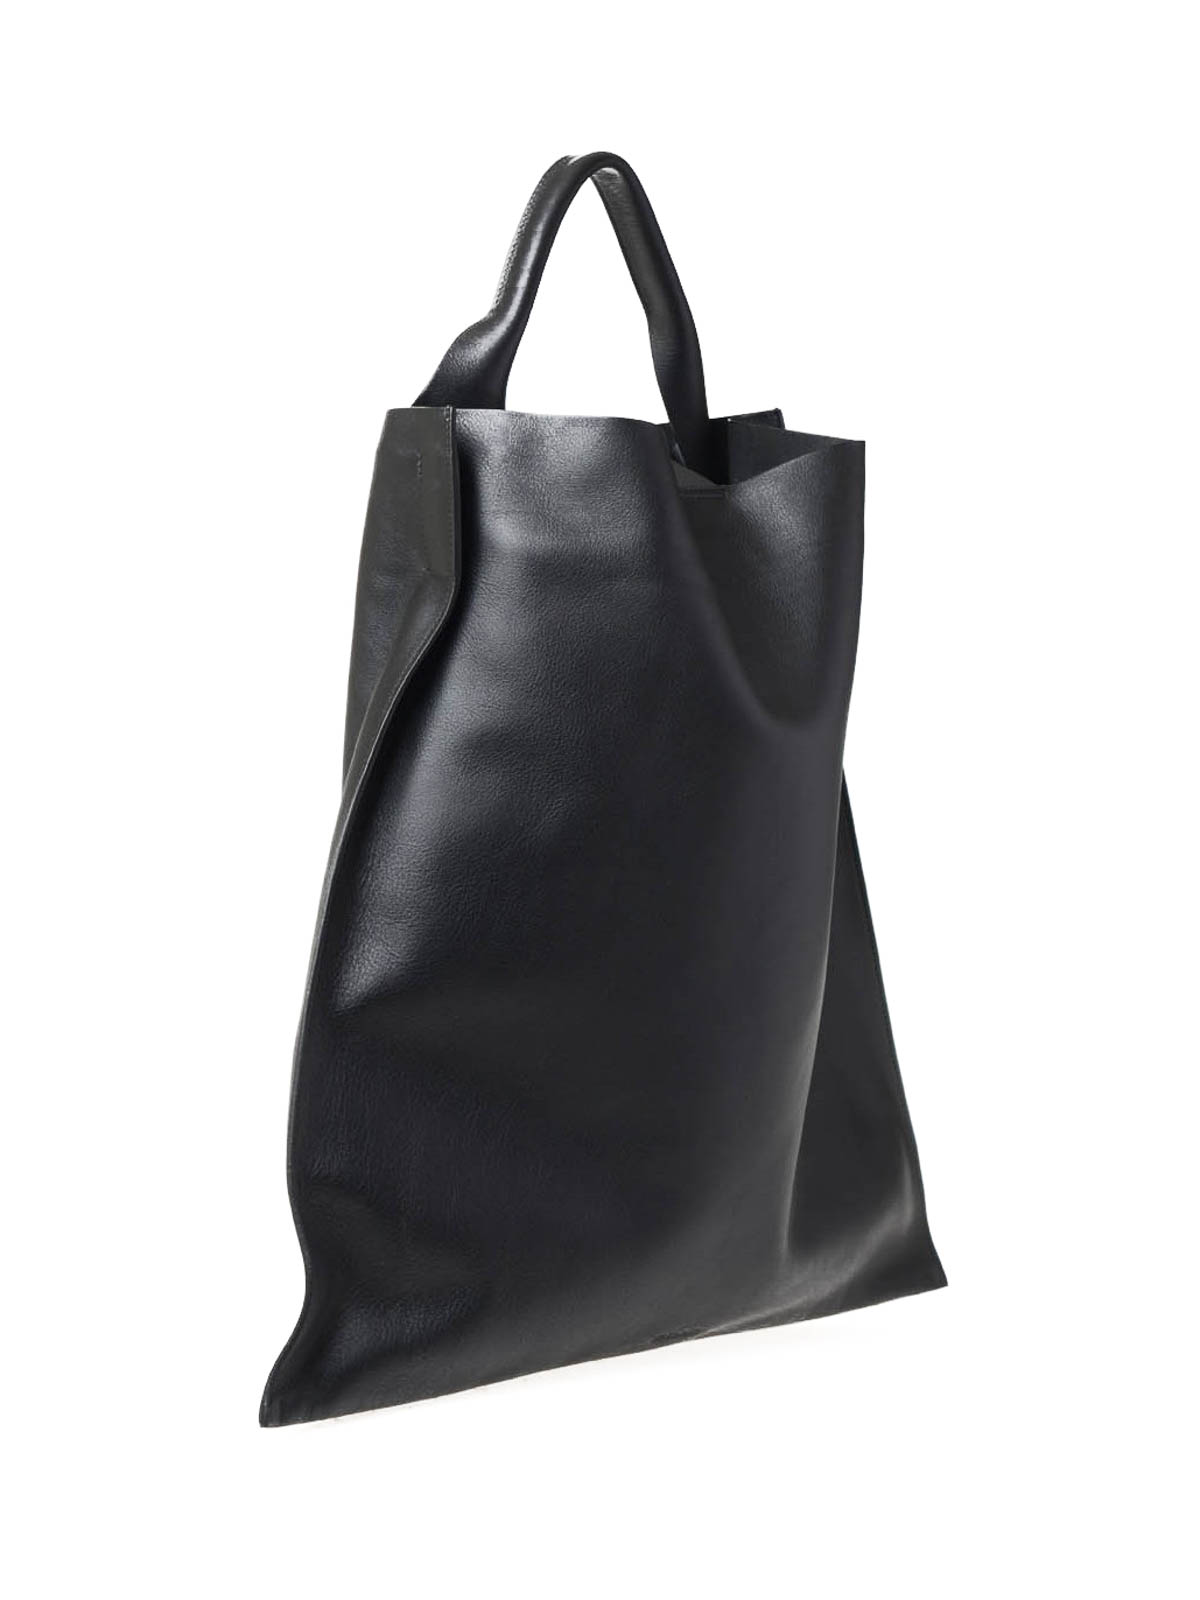 Totes bags Jil Sander - Xiao handbag - JSPH850041WHB00005001 